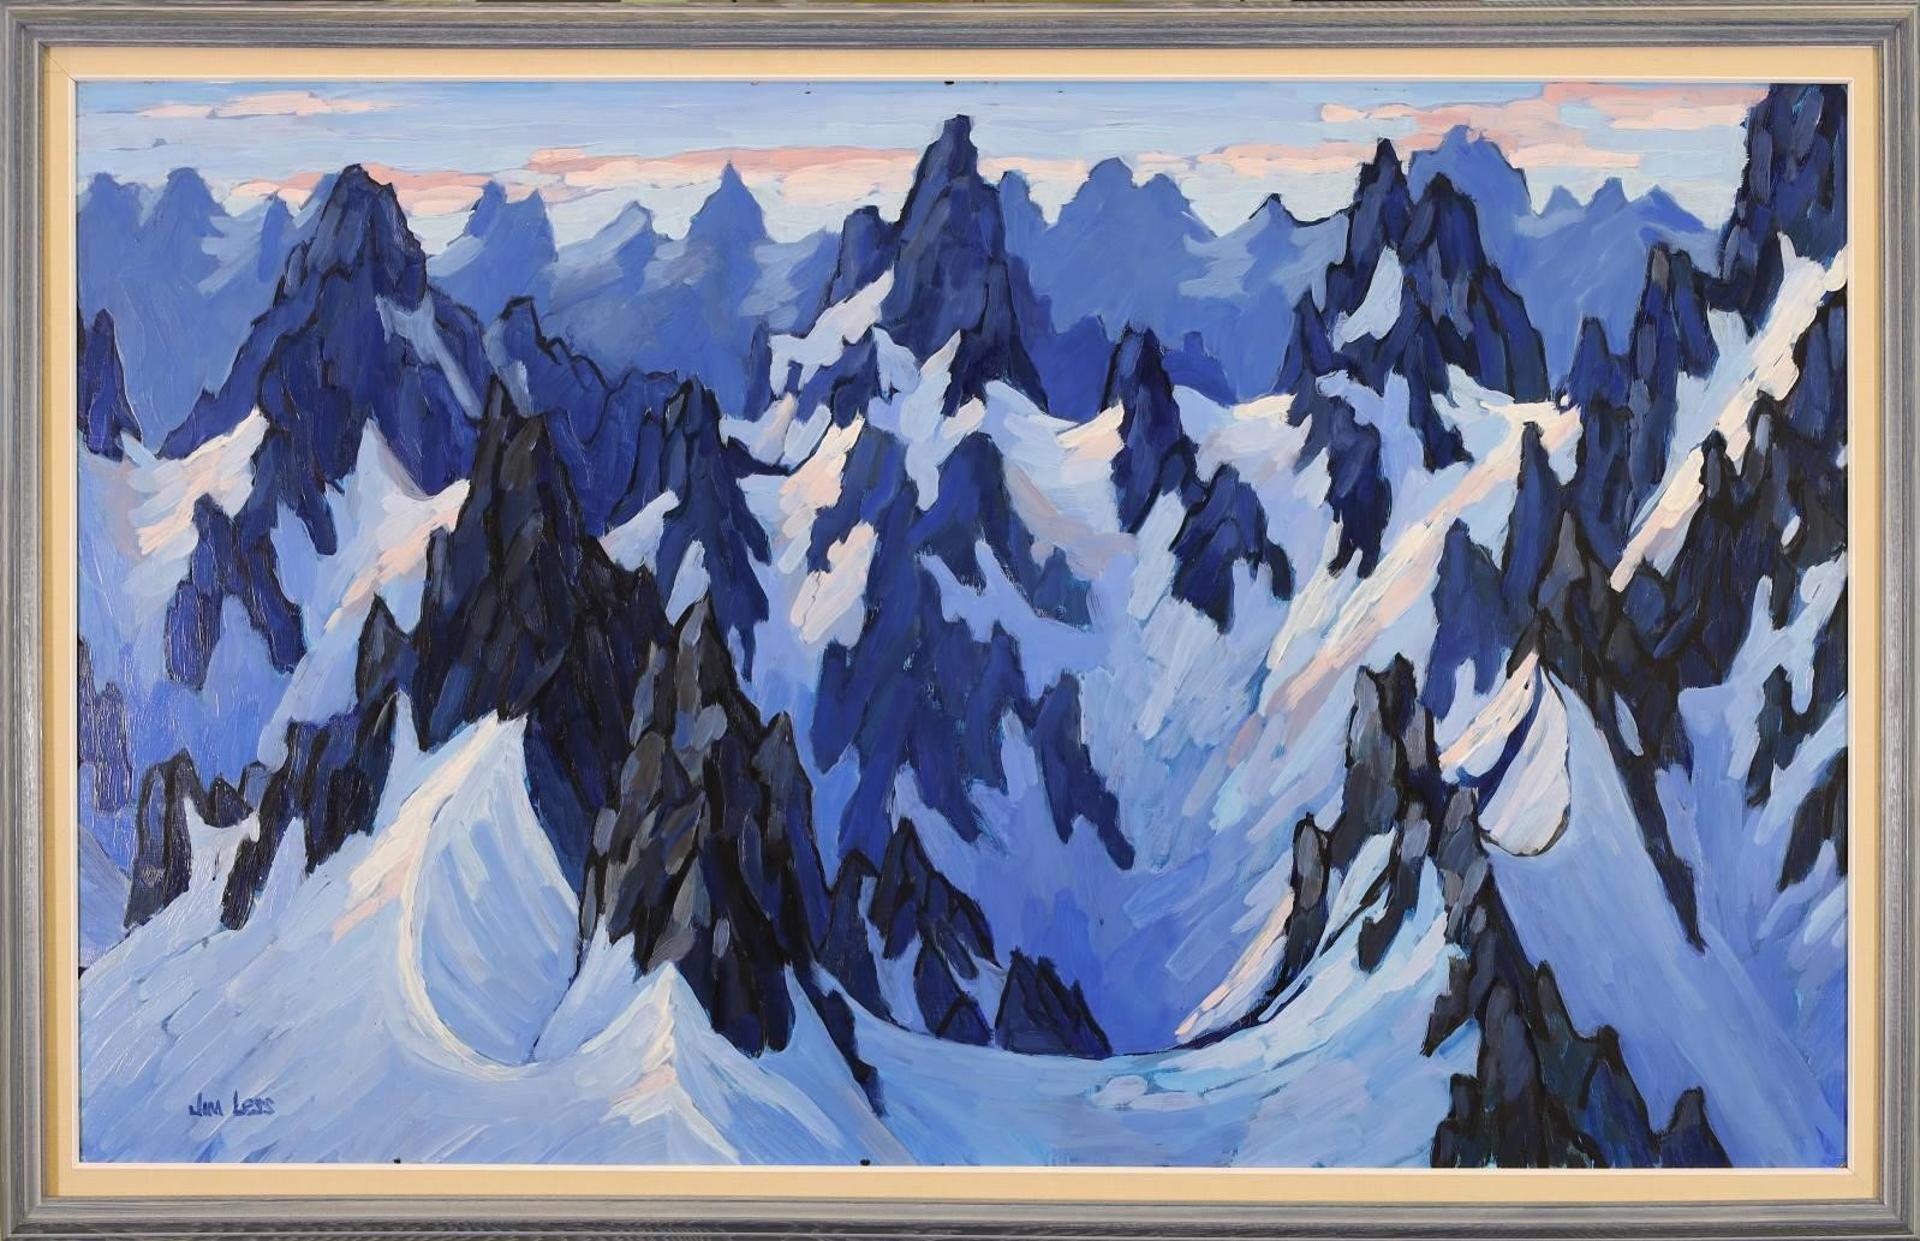 Jim Less (1951) - “Badshot Range, Winter Sunset”